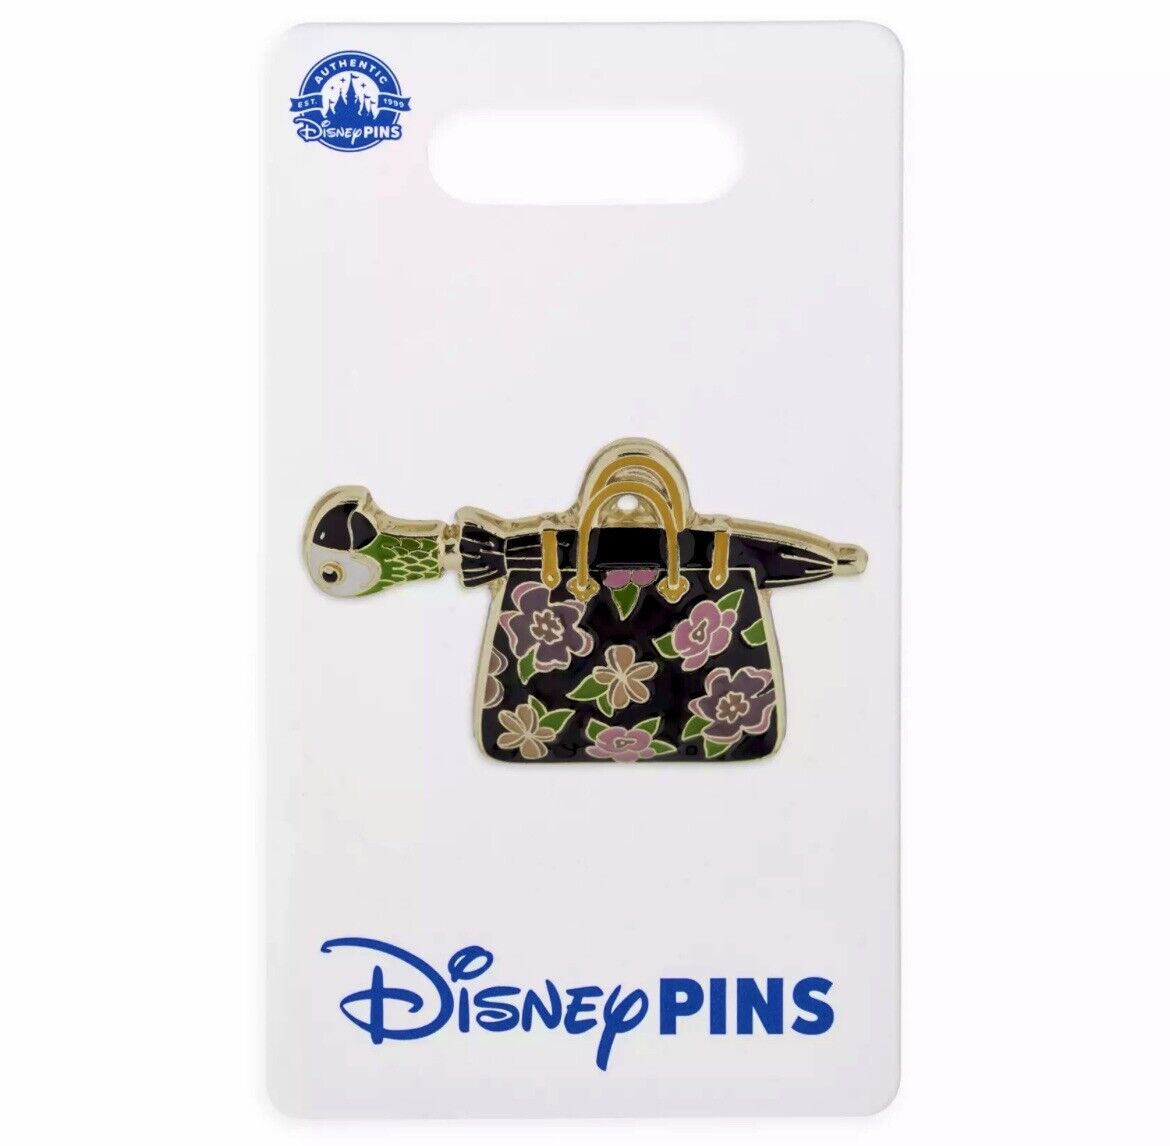 Disney Parks Mary Poppins Sculpted Carpet Bag Parrot Umbrella Trading Pin - NEW